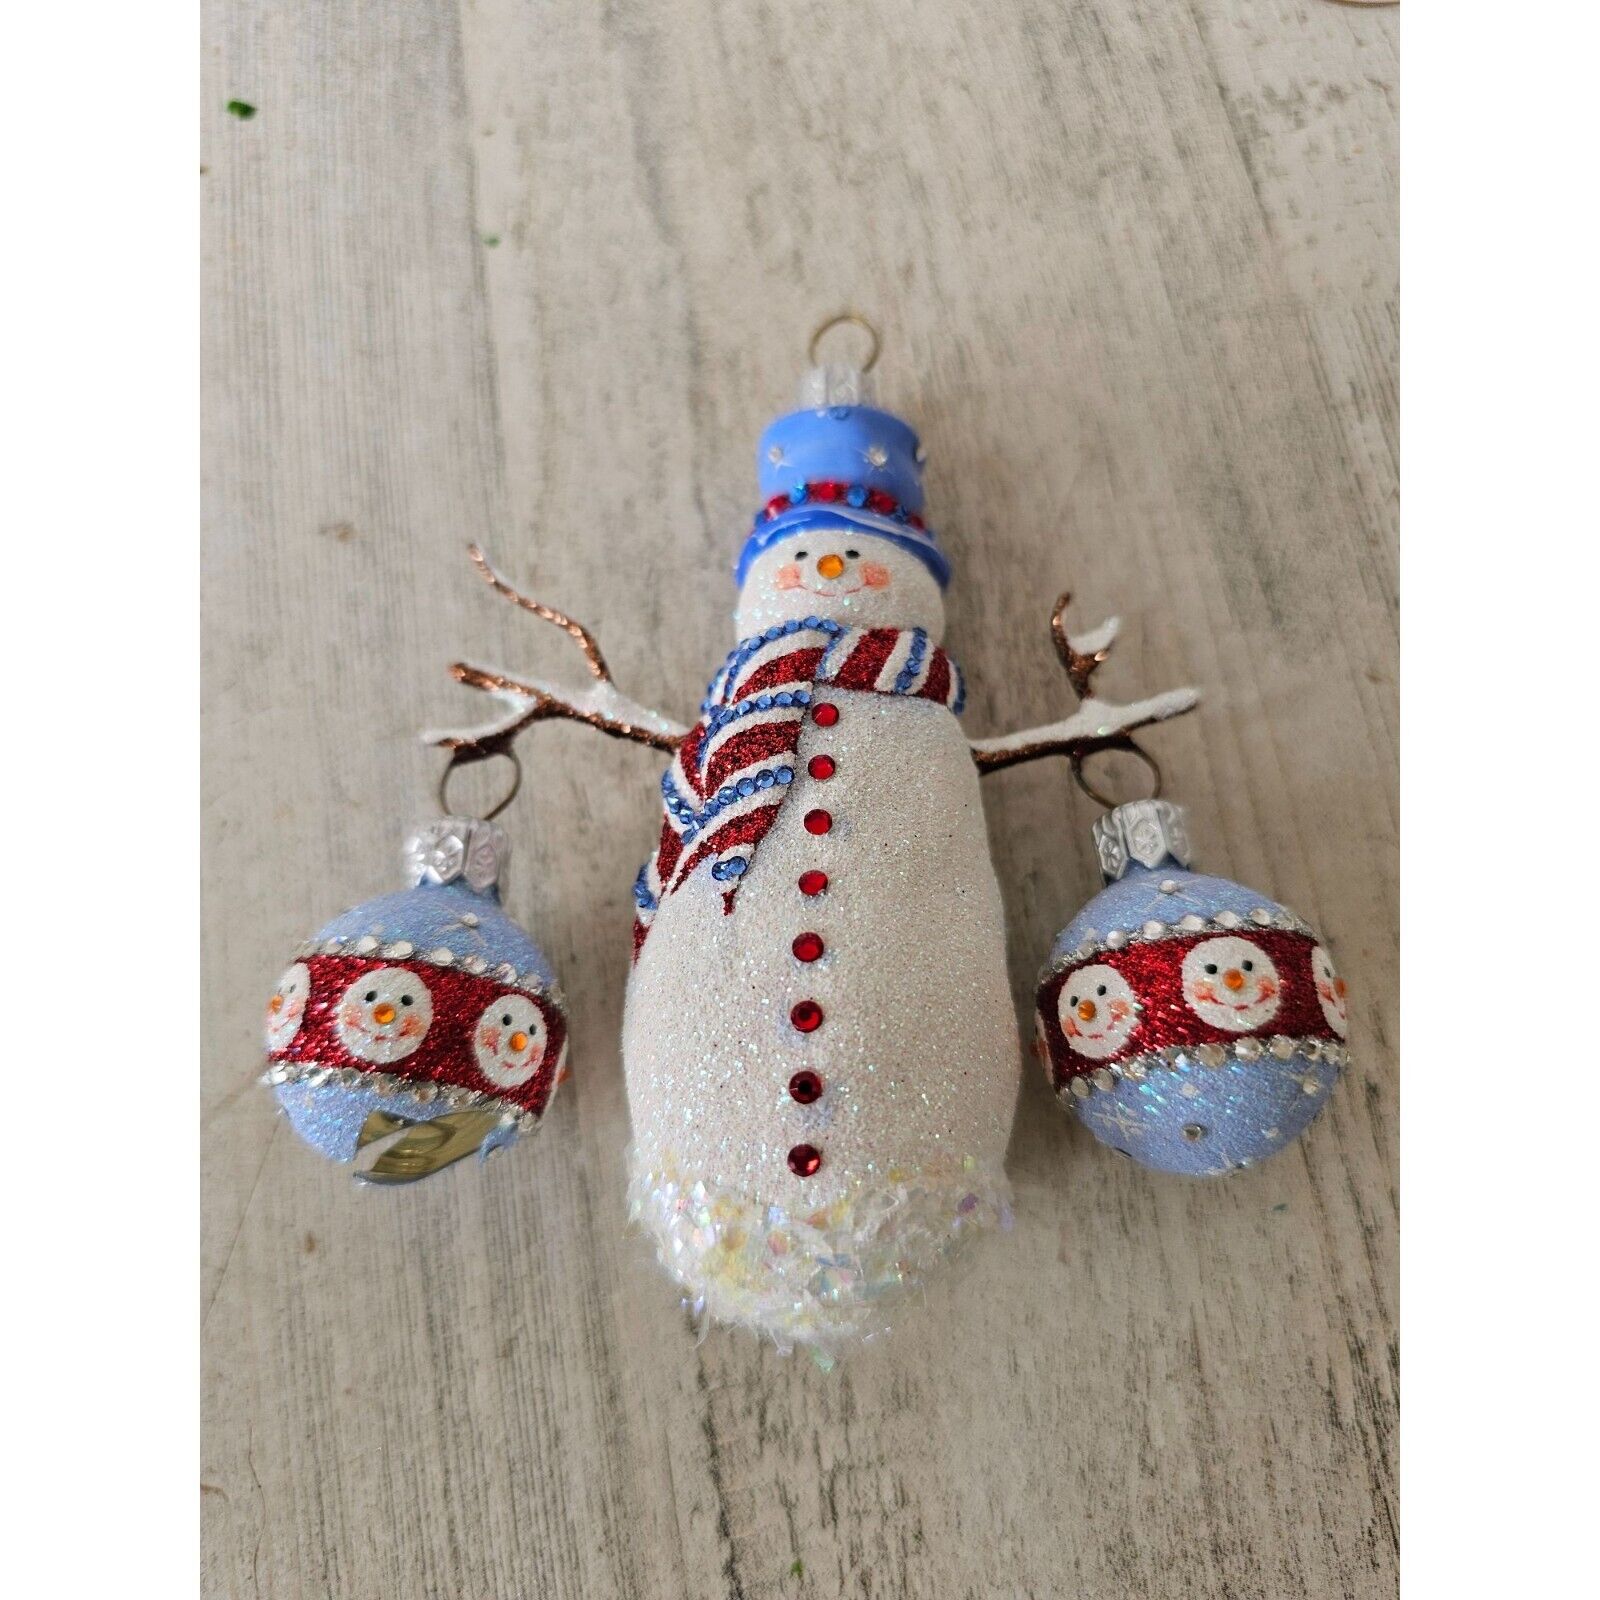 Patricia breen frosty snowman AS IS ornament festive glitter Xmas free